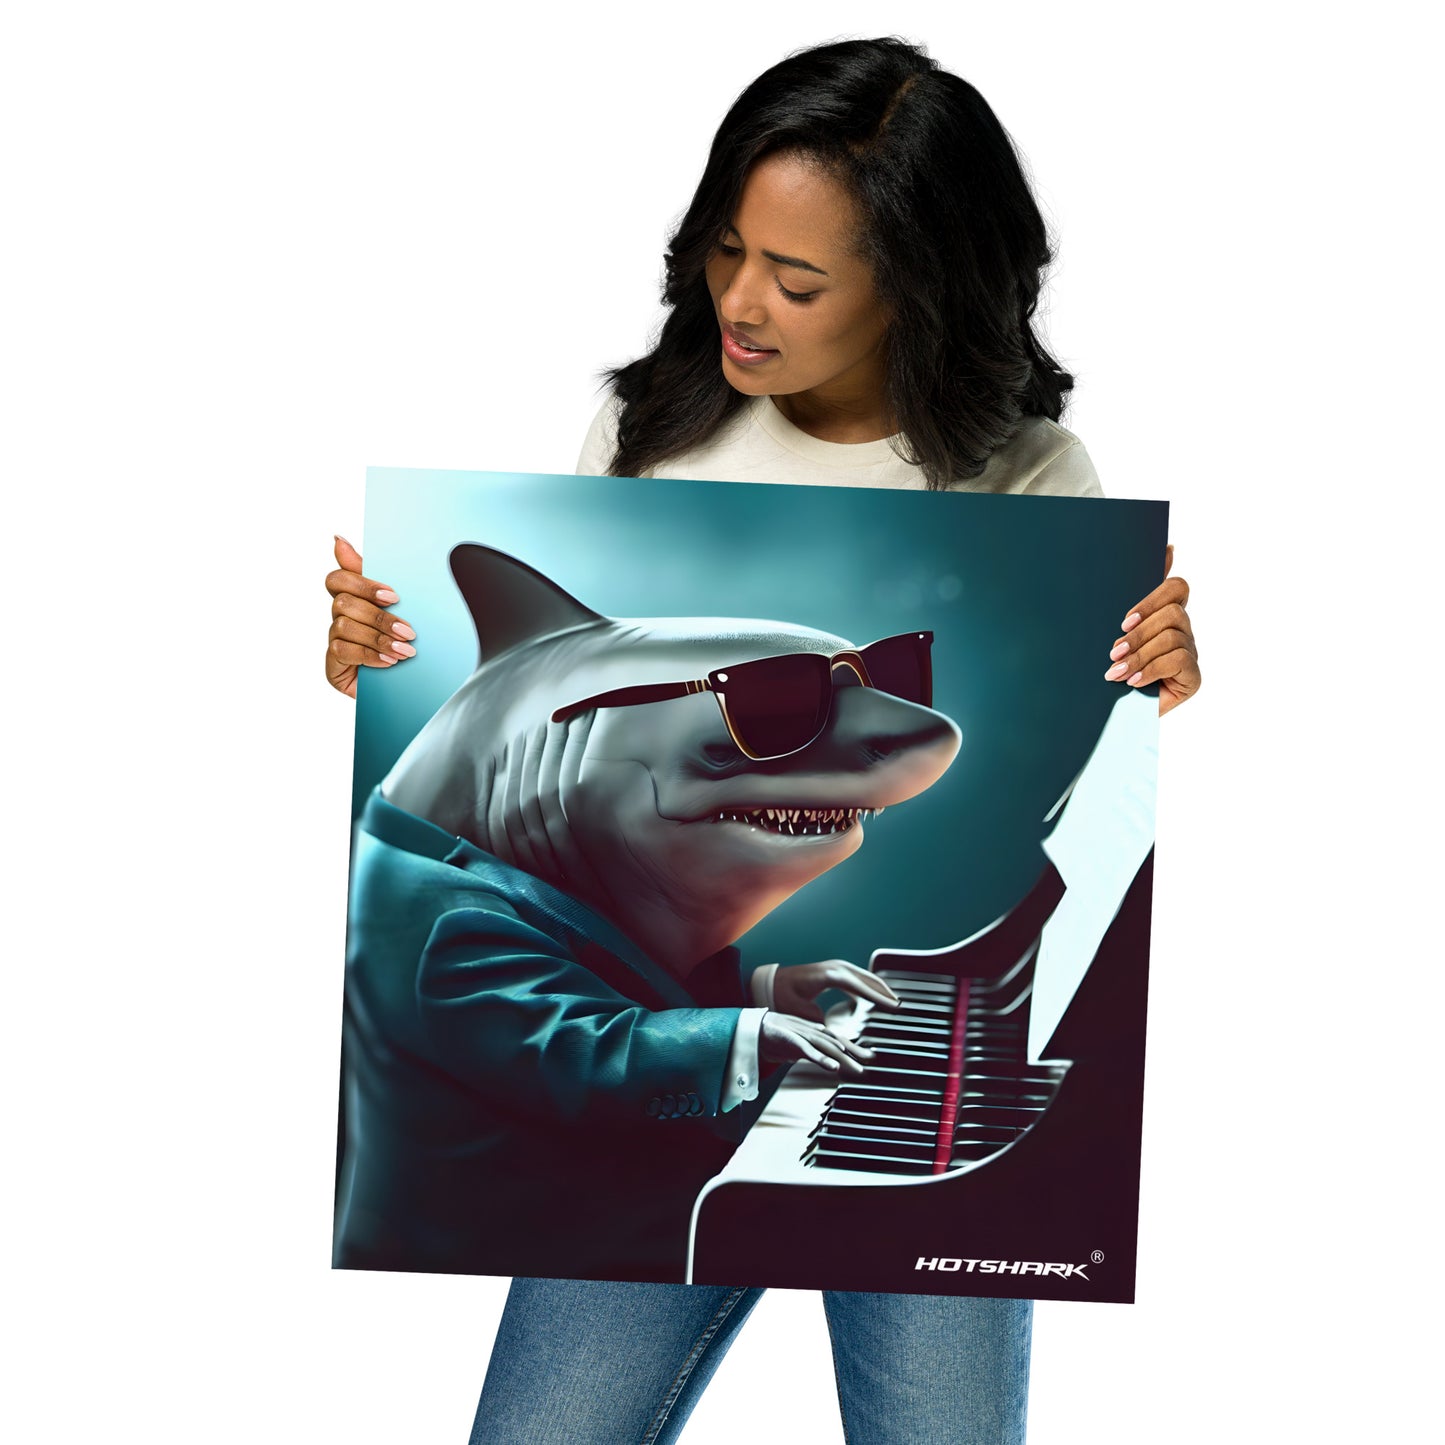 Piano Shark - Poster